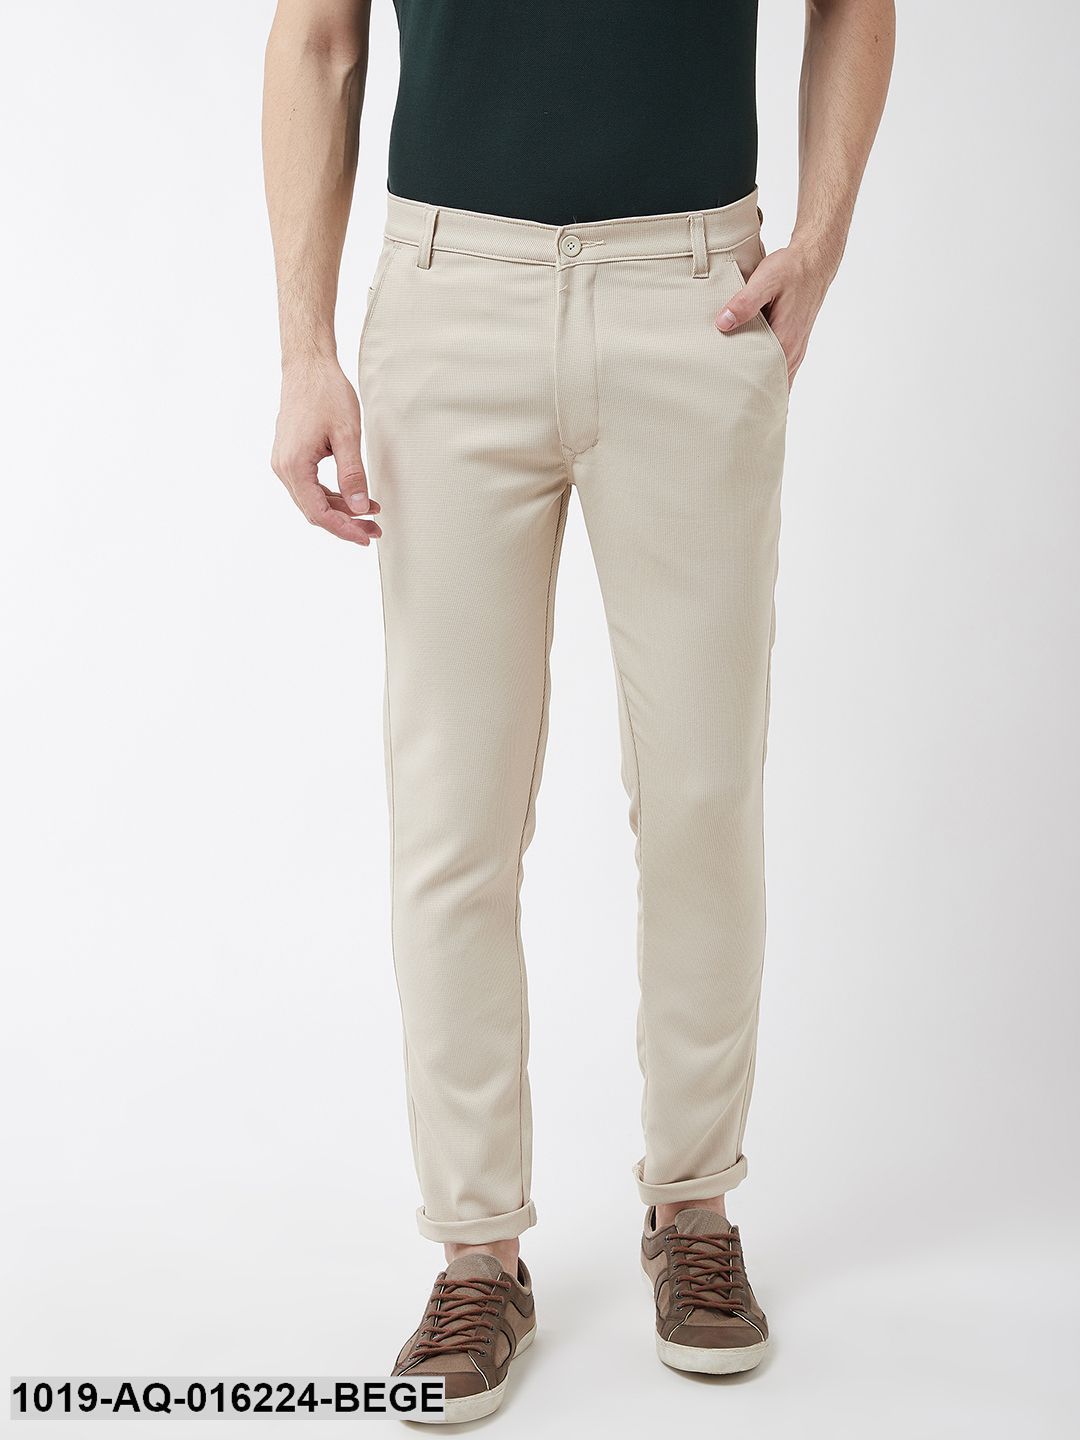 Men's Cotton Blend Beige Woven Design Casual Trousers - Final Clearance Sale